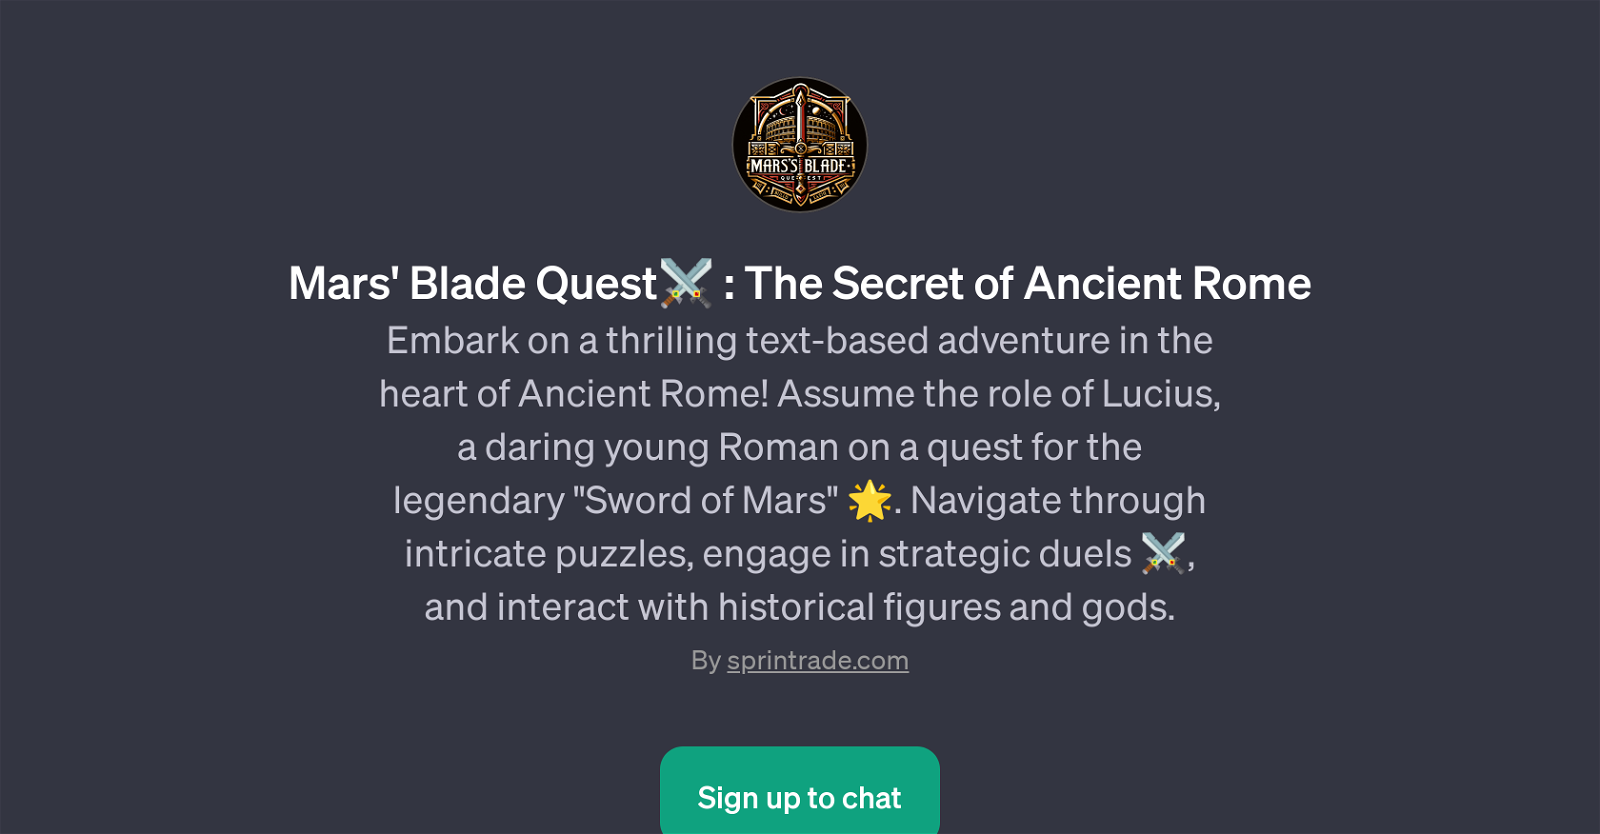 Mars' Blade Quest: The Secret of Ancient Rome website